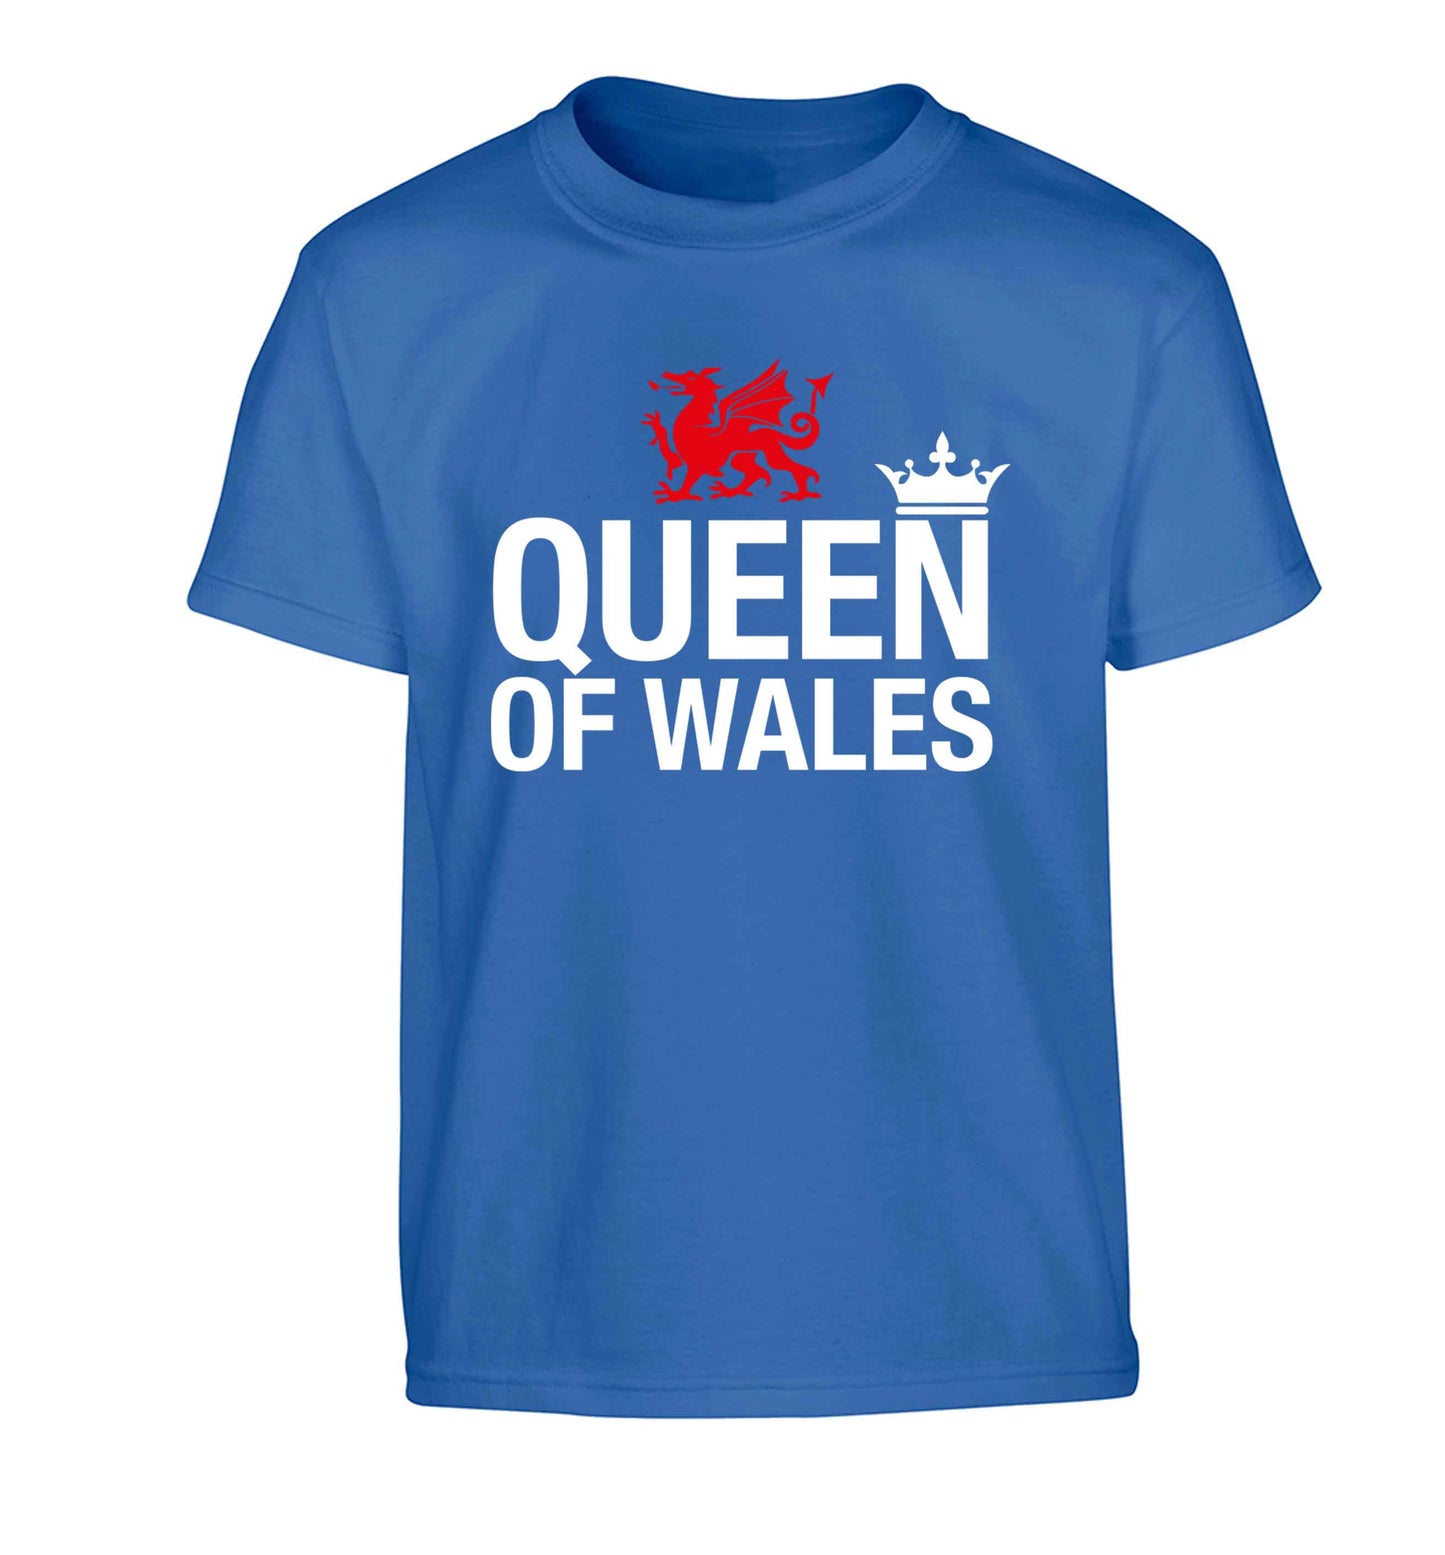 Queen of Wales Children's blue Tshirt 12-13 Years